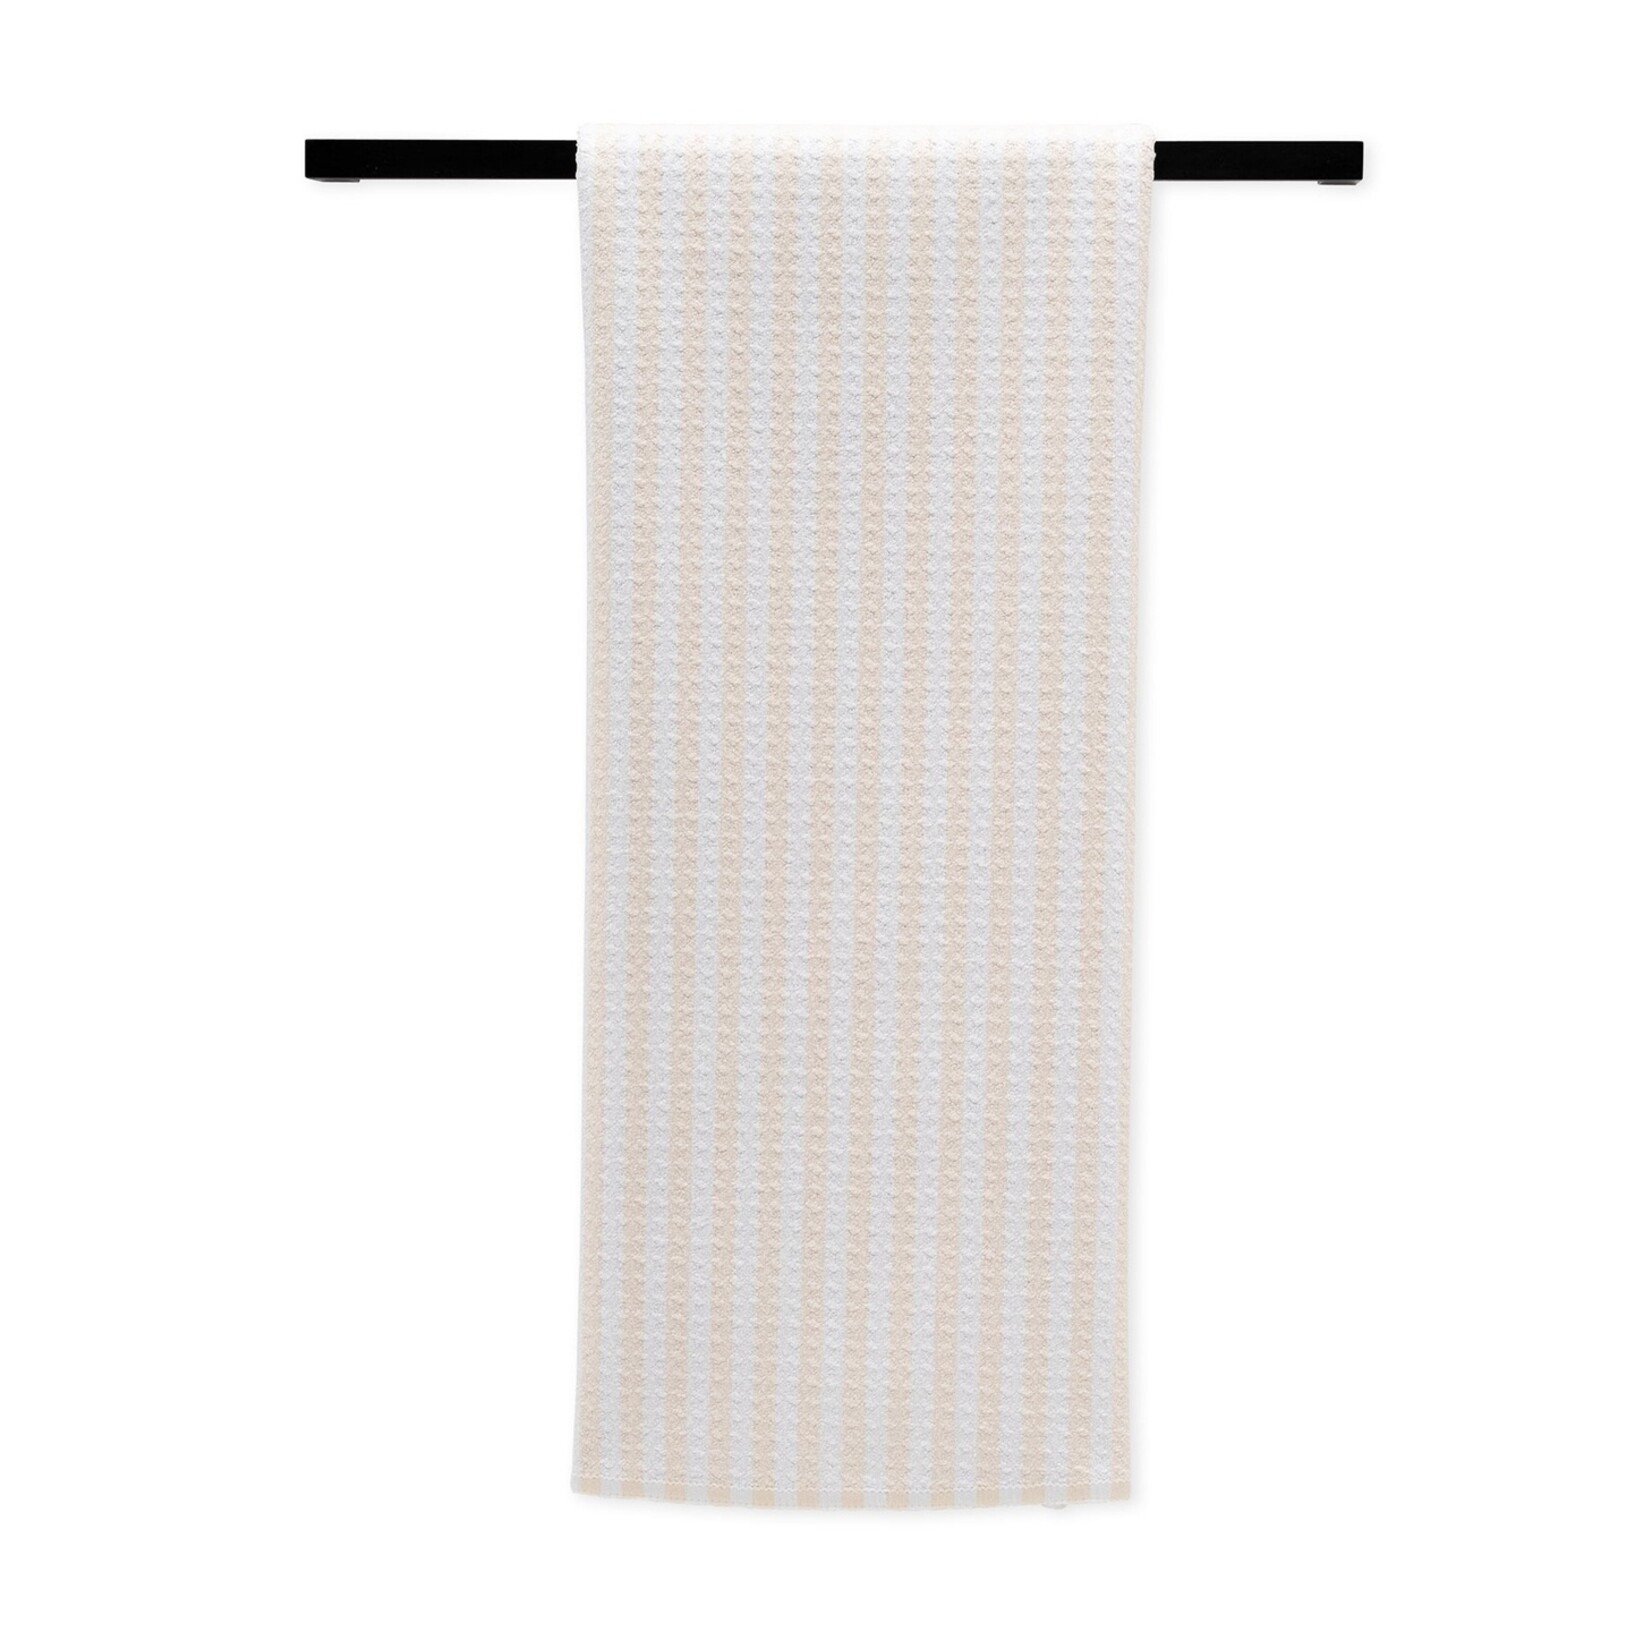 Geometry Geometry - Summer Stripe Cream Kitchen Tea Towel